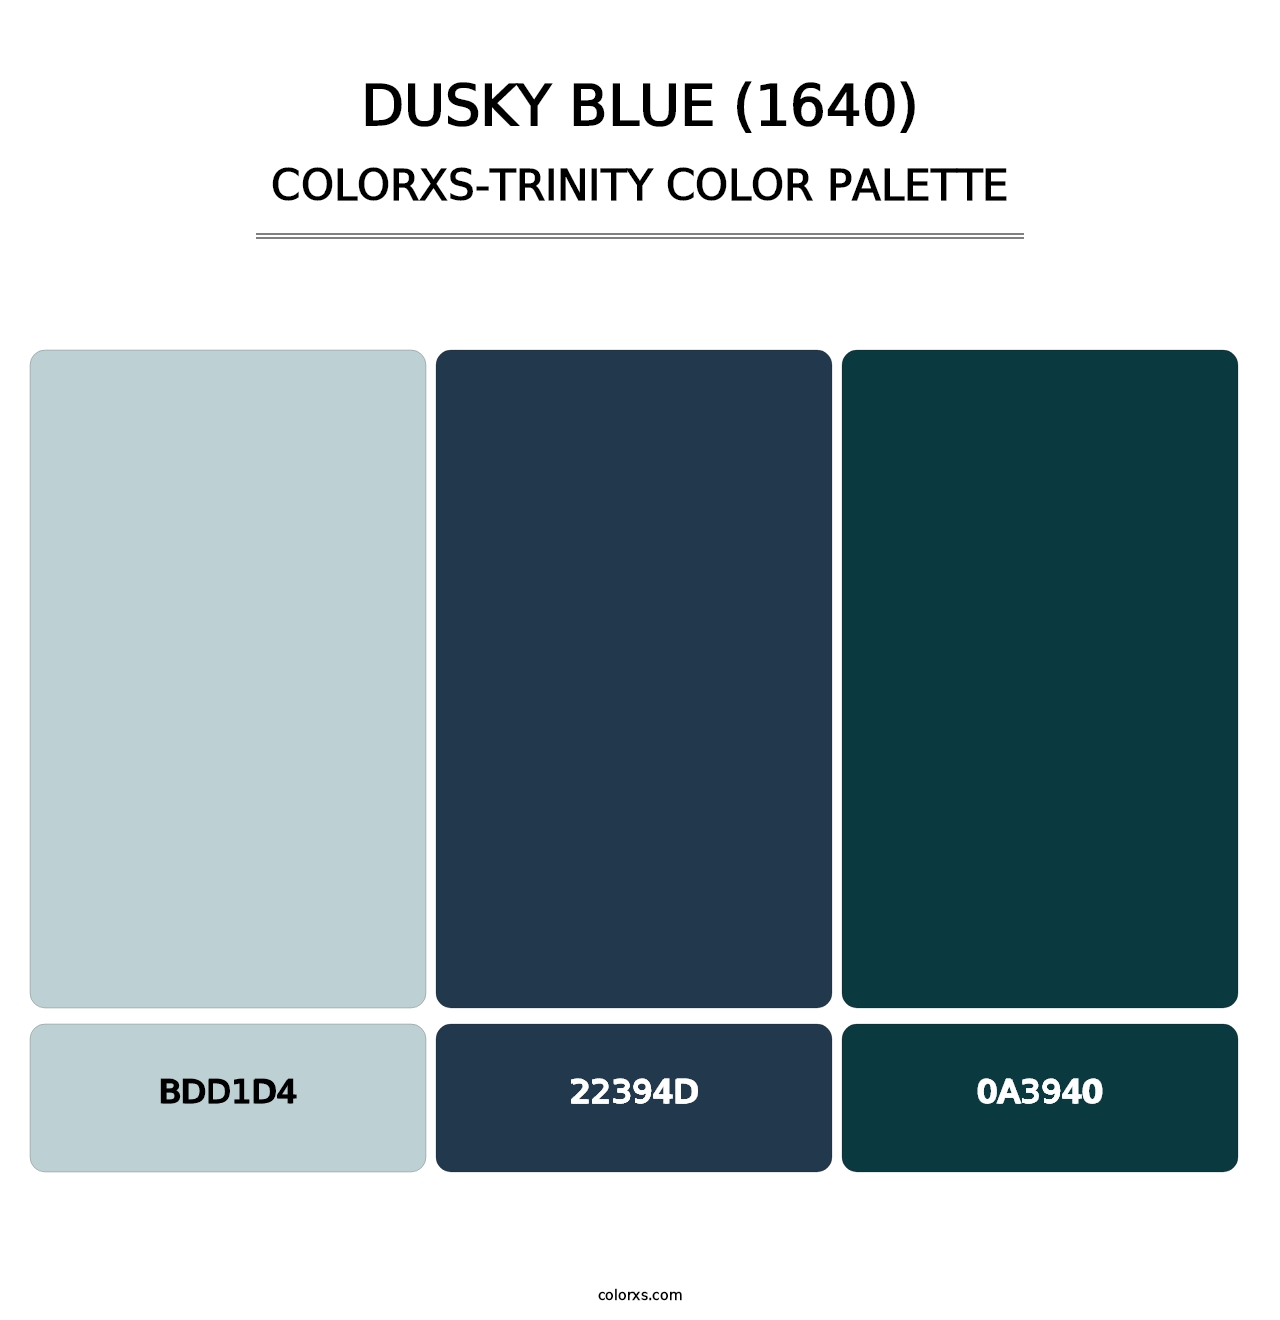 Dusky Blue (1640) - Colorxs Trinity Palette